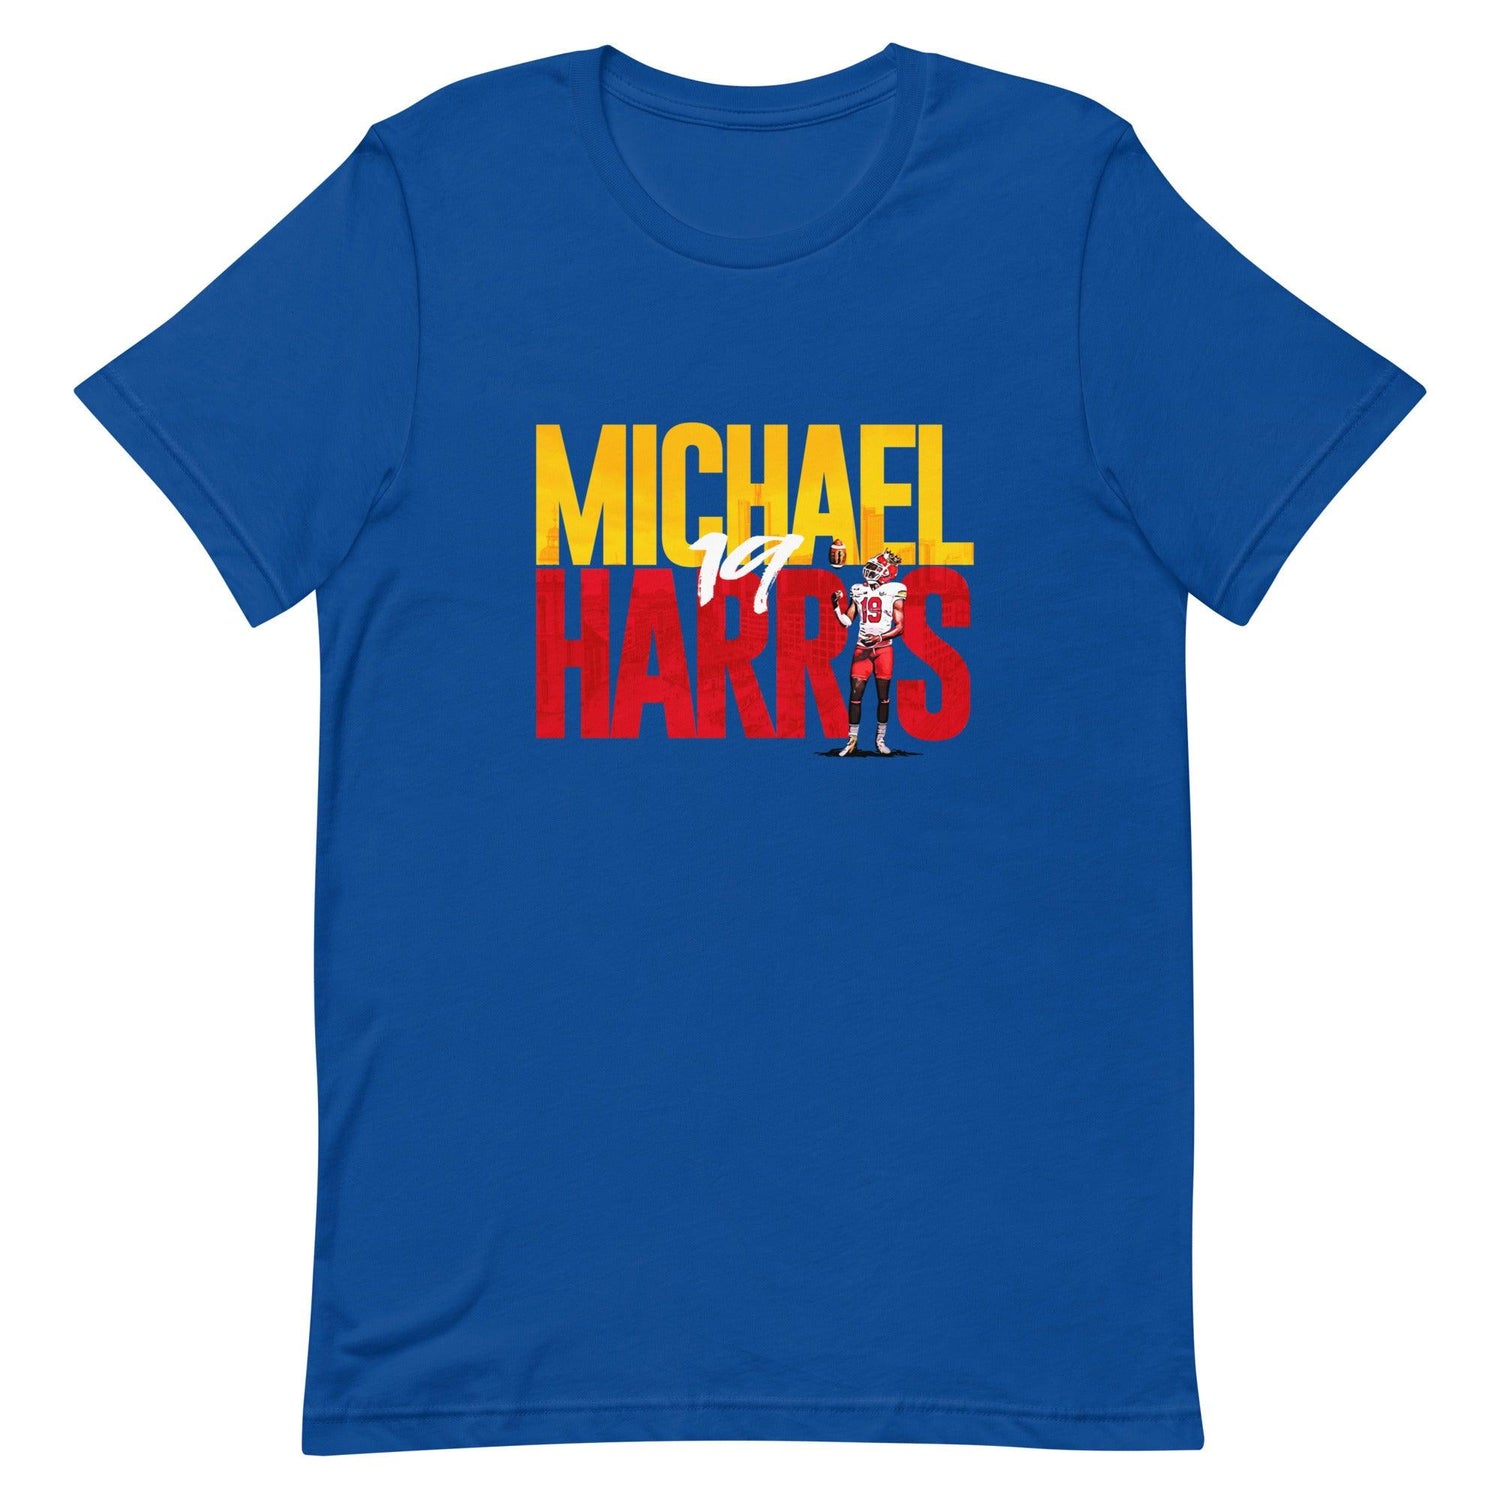 Michael Harris "Gameday" t-shirt - Fan Arch